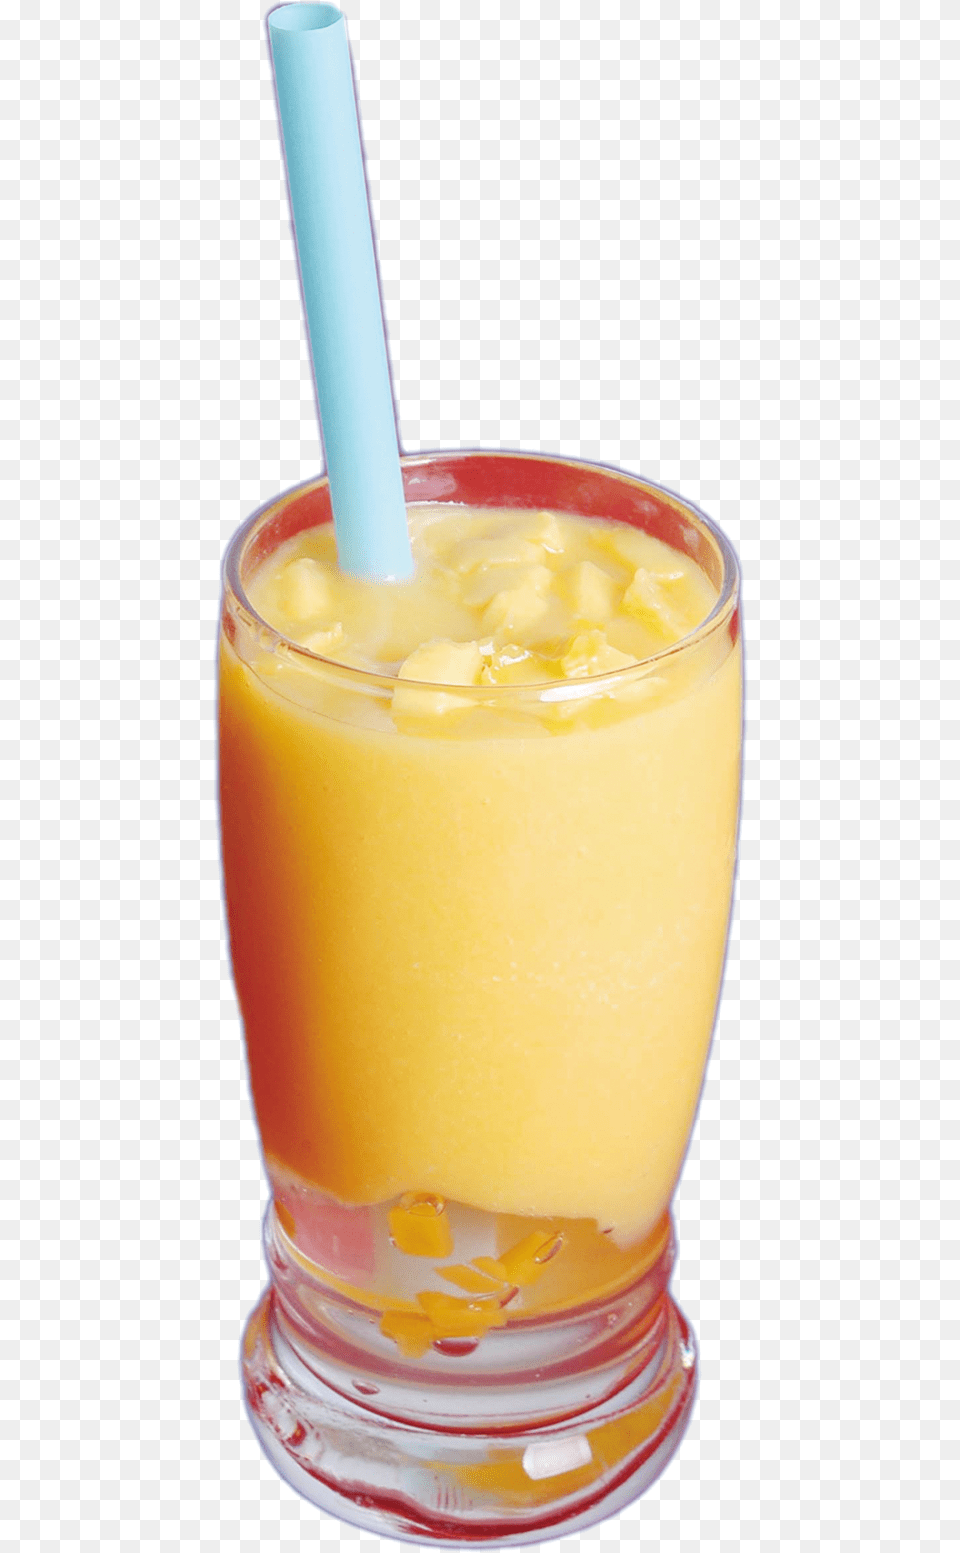 Mango Drink Orange Juice, Beverage, Smoothie Png Image